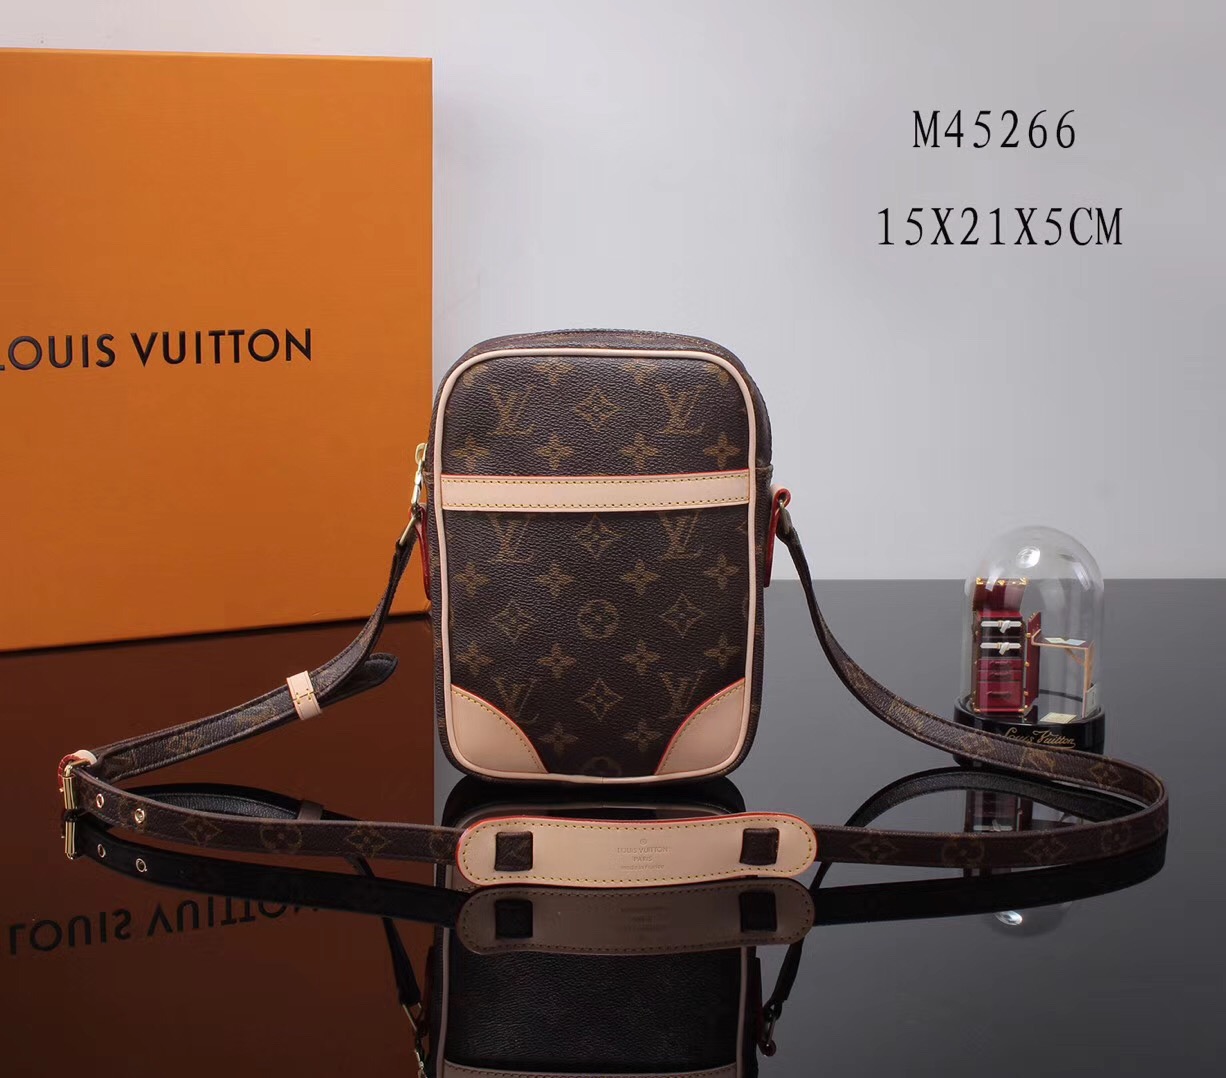 LV Louis Vuitton Monogram Small M45266 Shoulder bags Handbags Brown